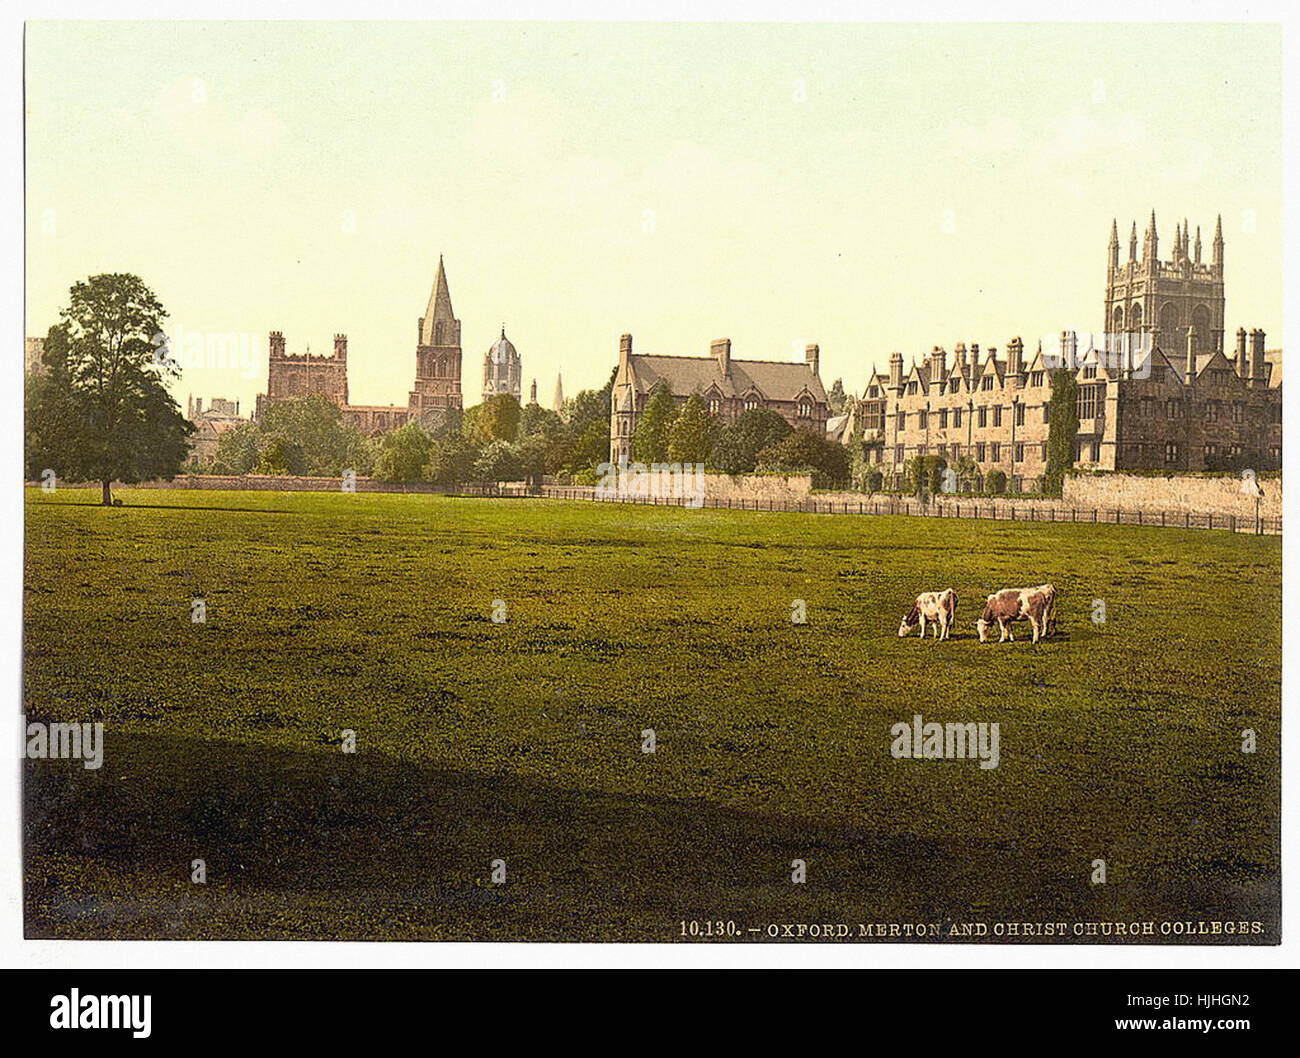 Merton und Christ Church College, Oxford, England - Photochrom XIXth Jahrhundert Stockfoto